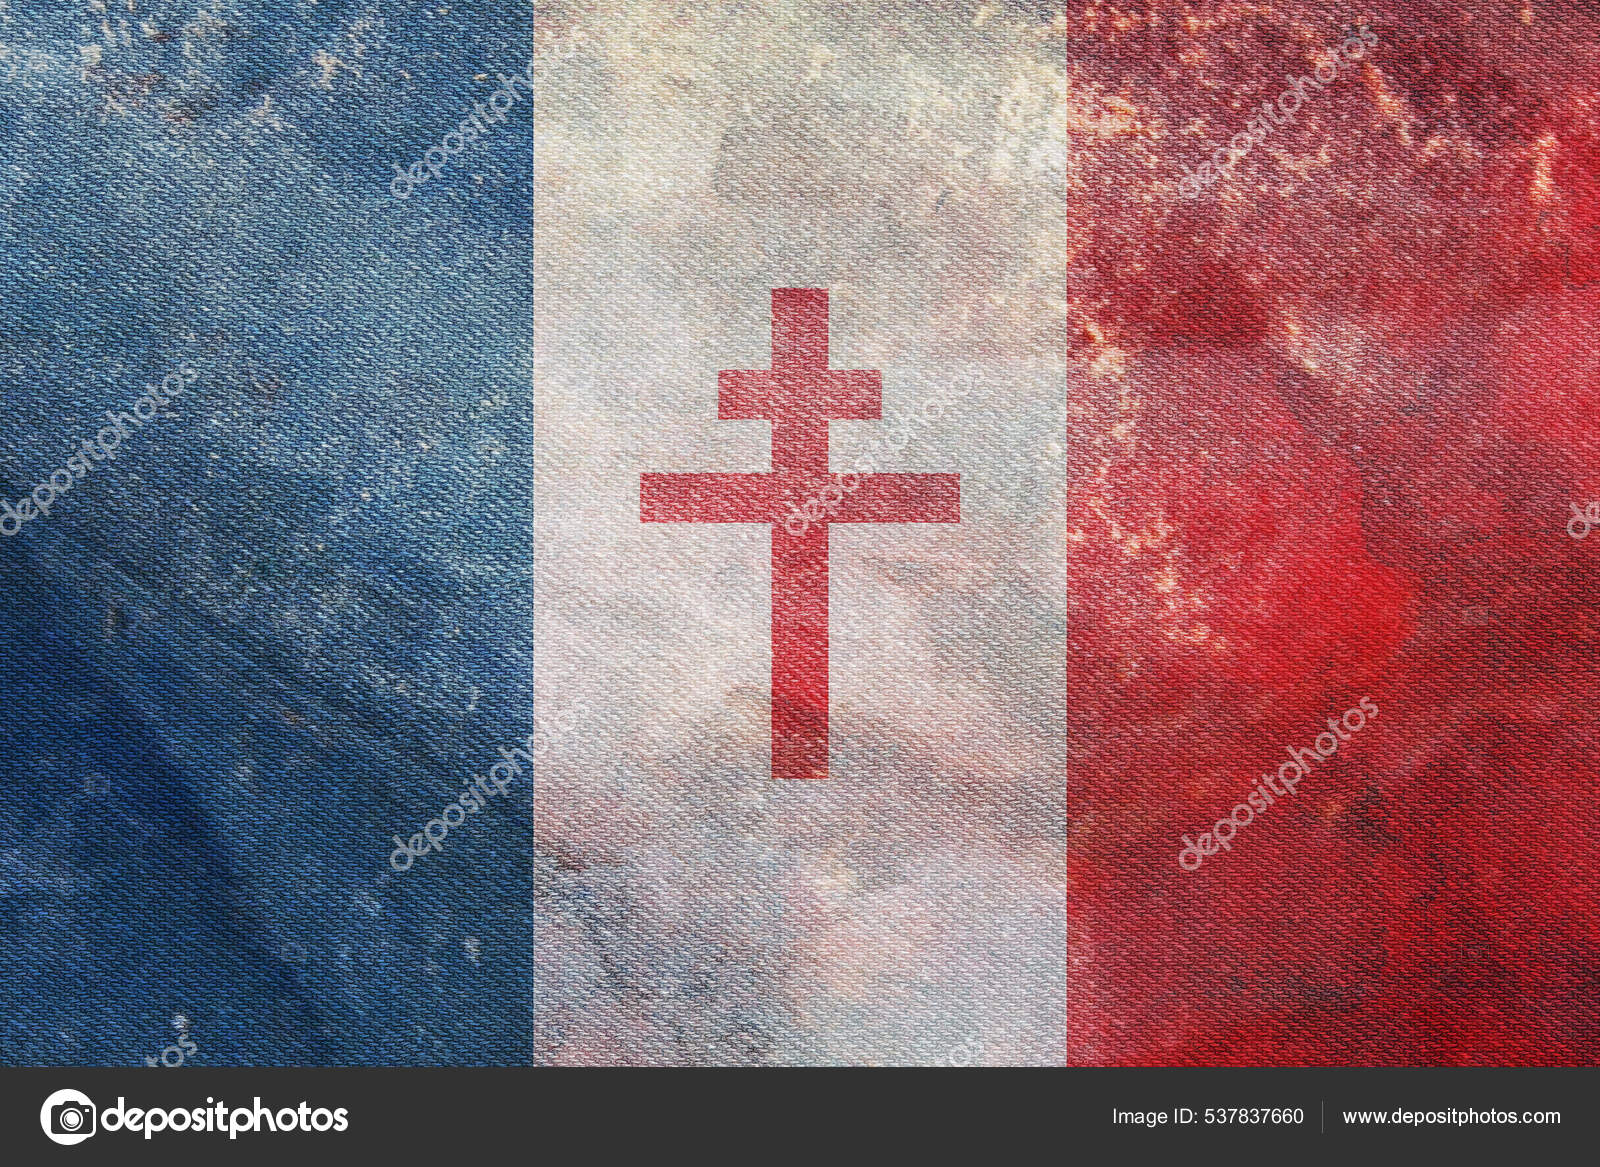 Flag Free France (1940-1944)